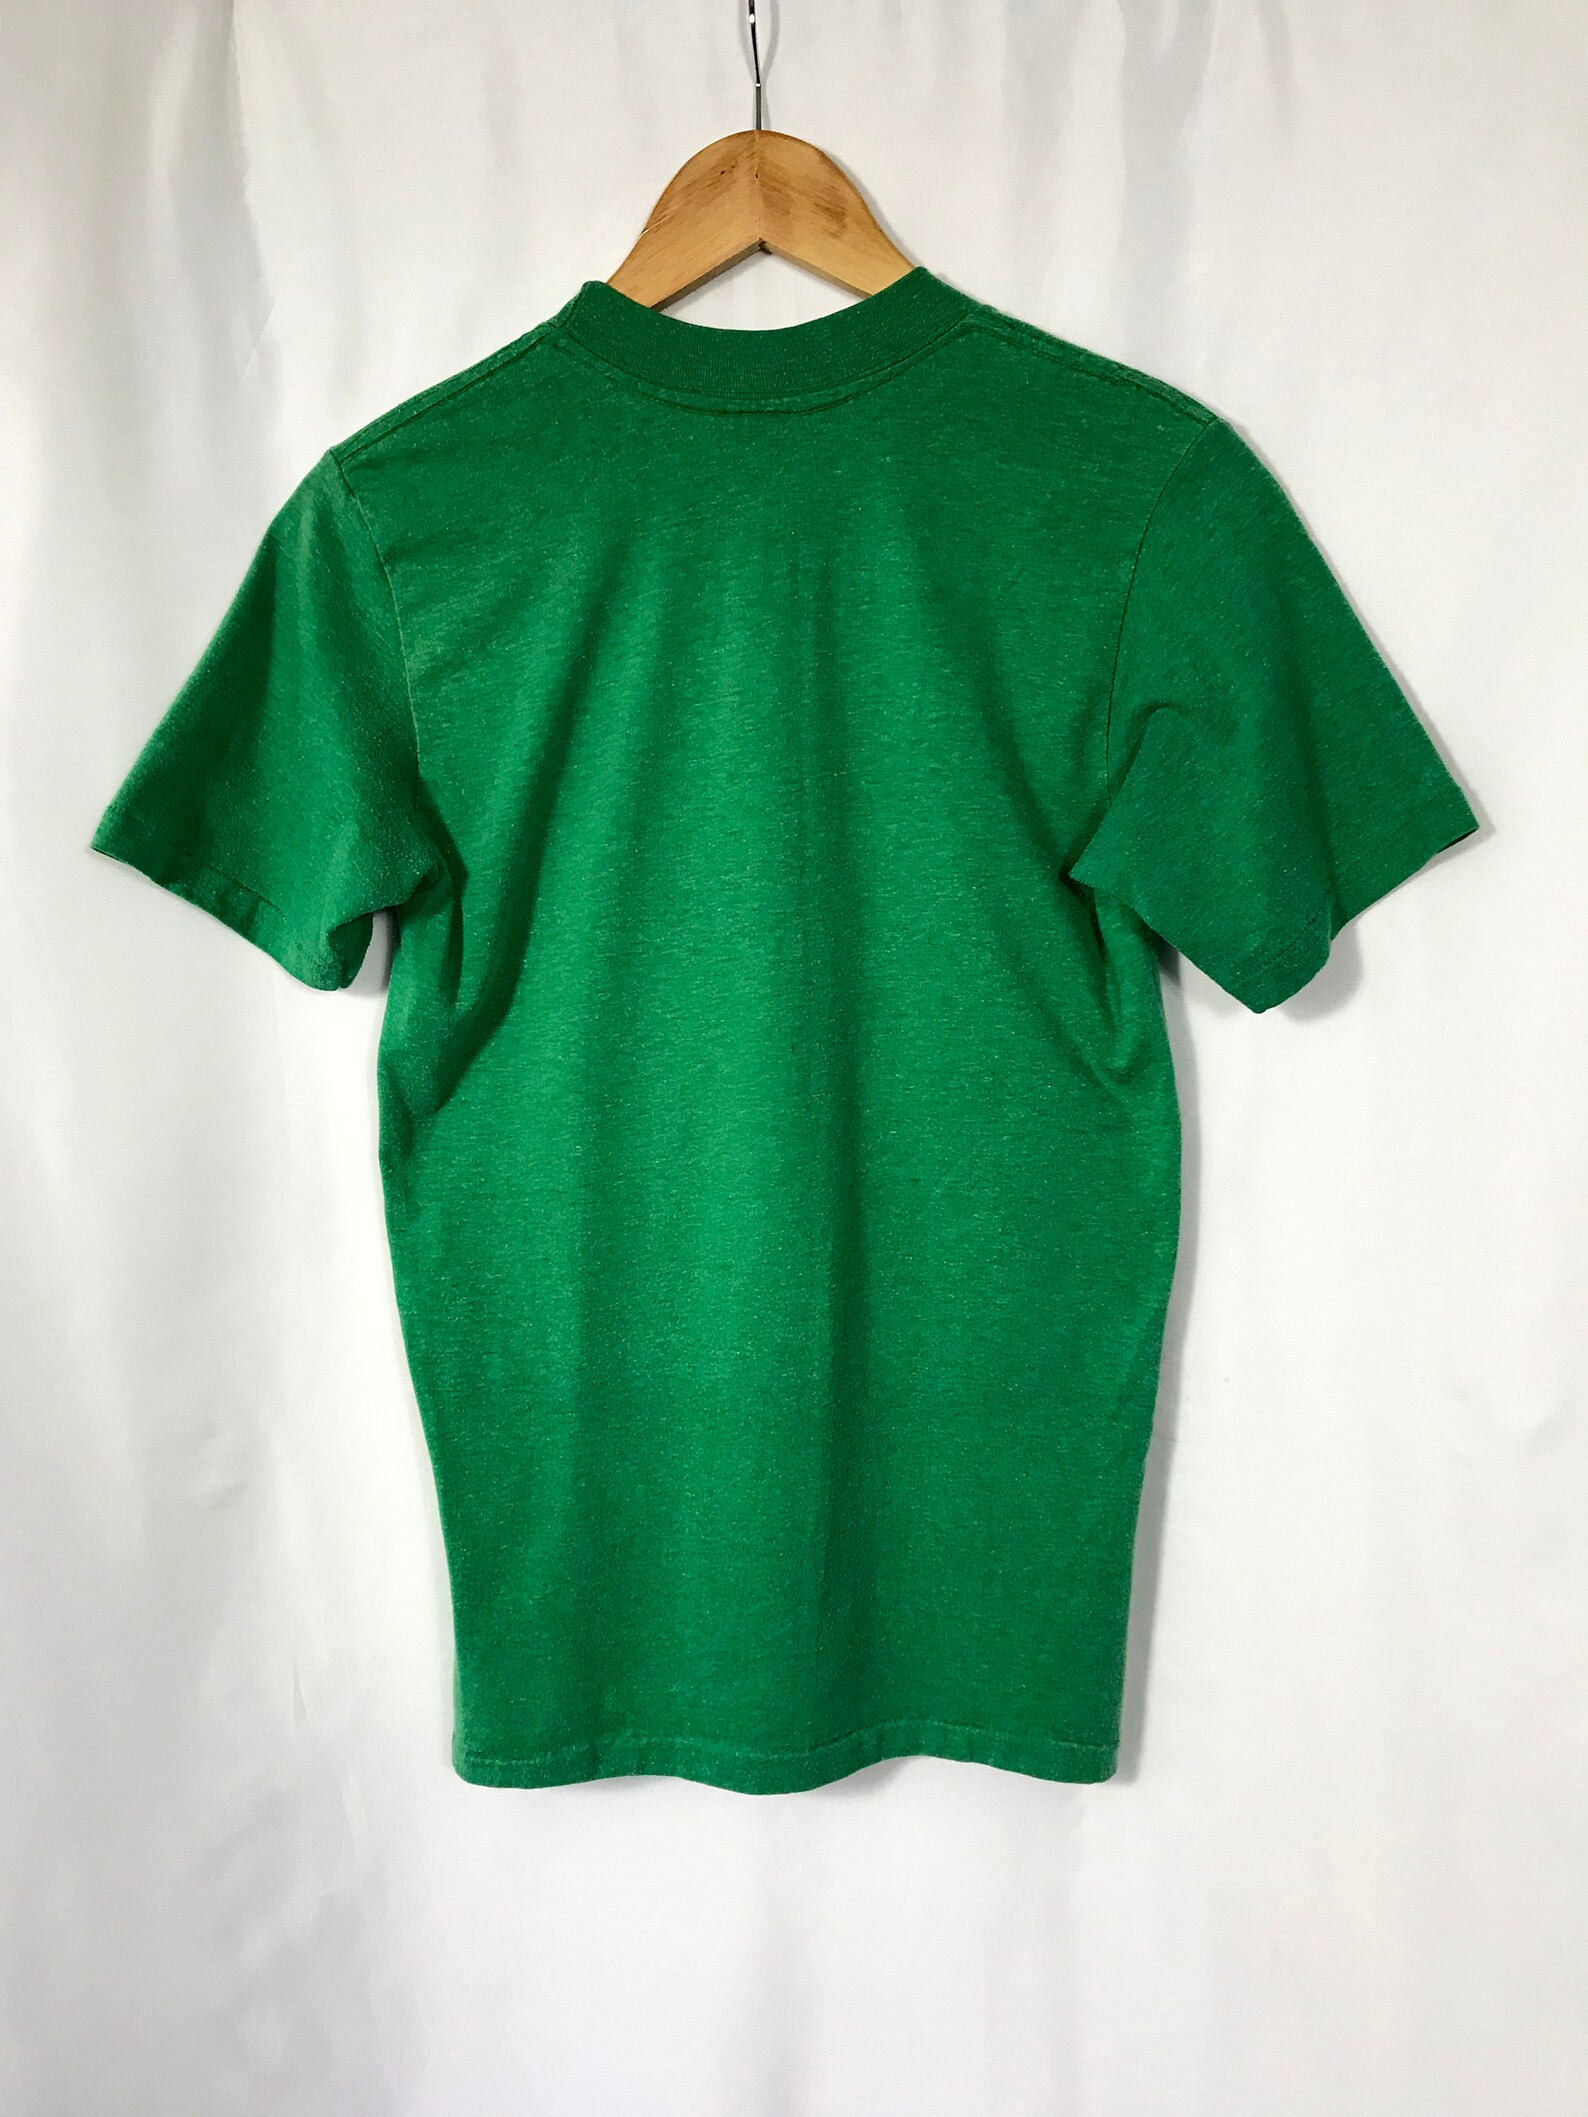 Vintage 4H T-shirt / Green 4-H Shirt / Size S / Texas T-shirt - Etsy